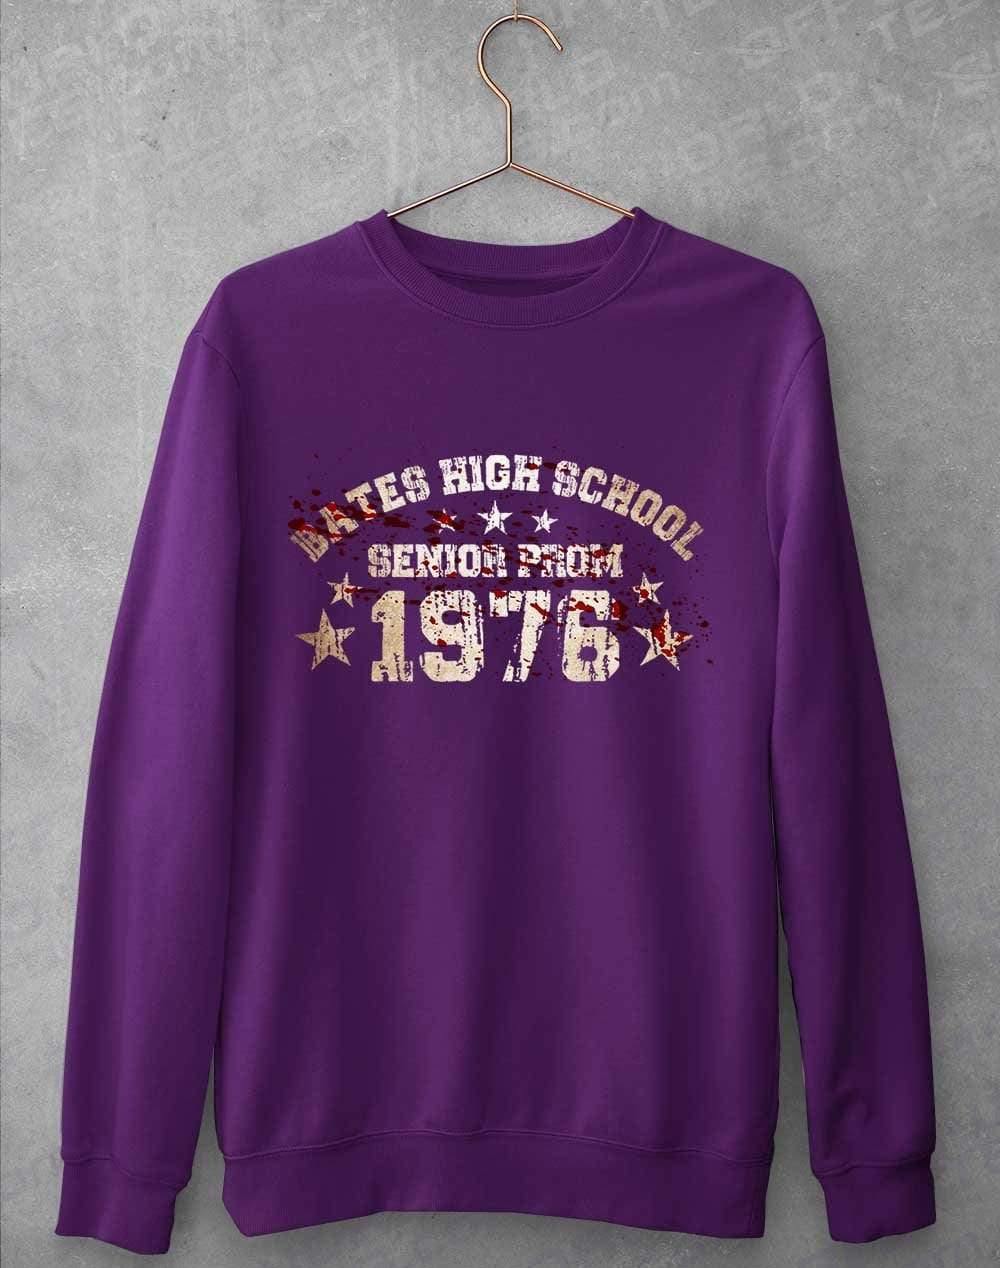 Bates High School Prom 1976 Sweatshirt S / Purple  - Off World Tees